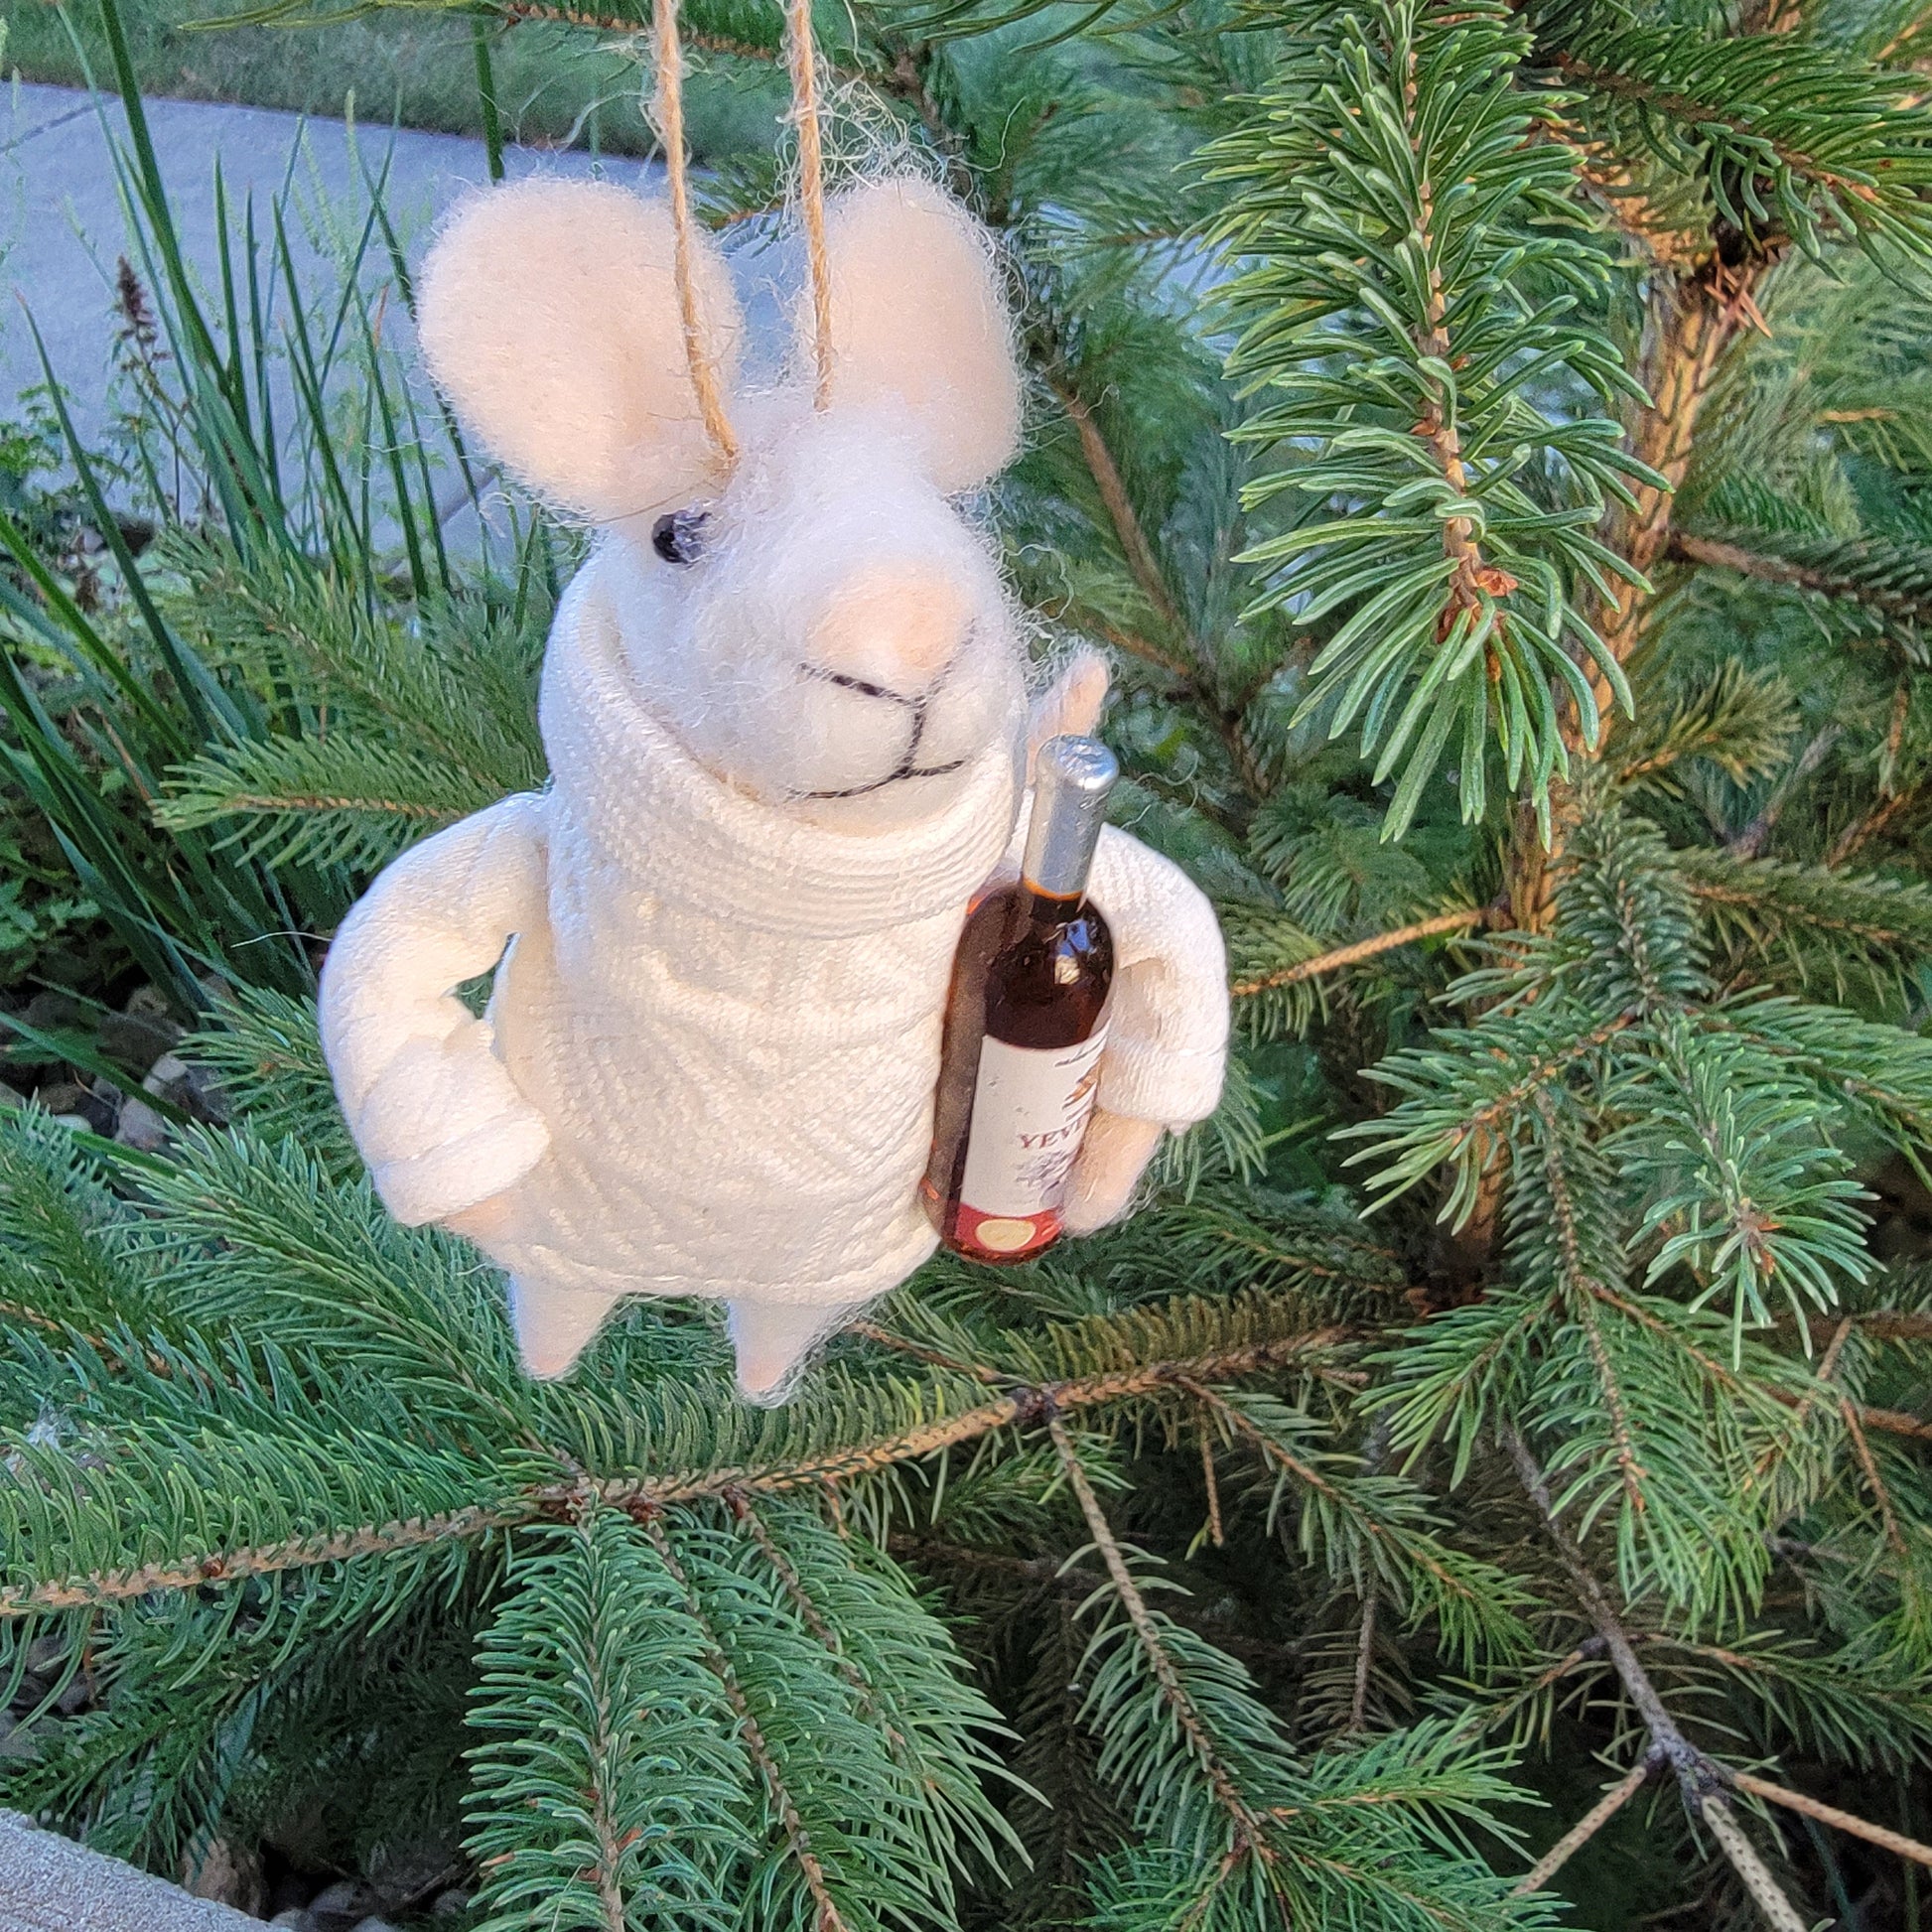 Felt Mouse White Knit Sweater wine bottle